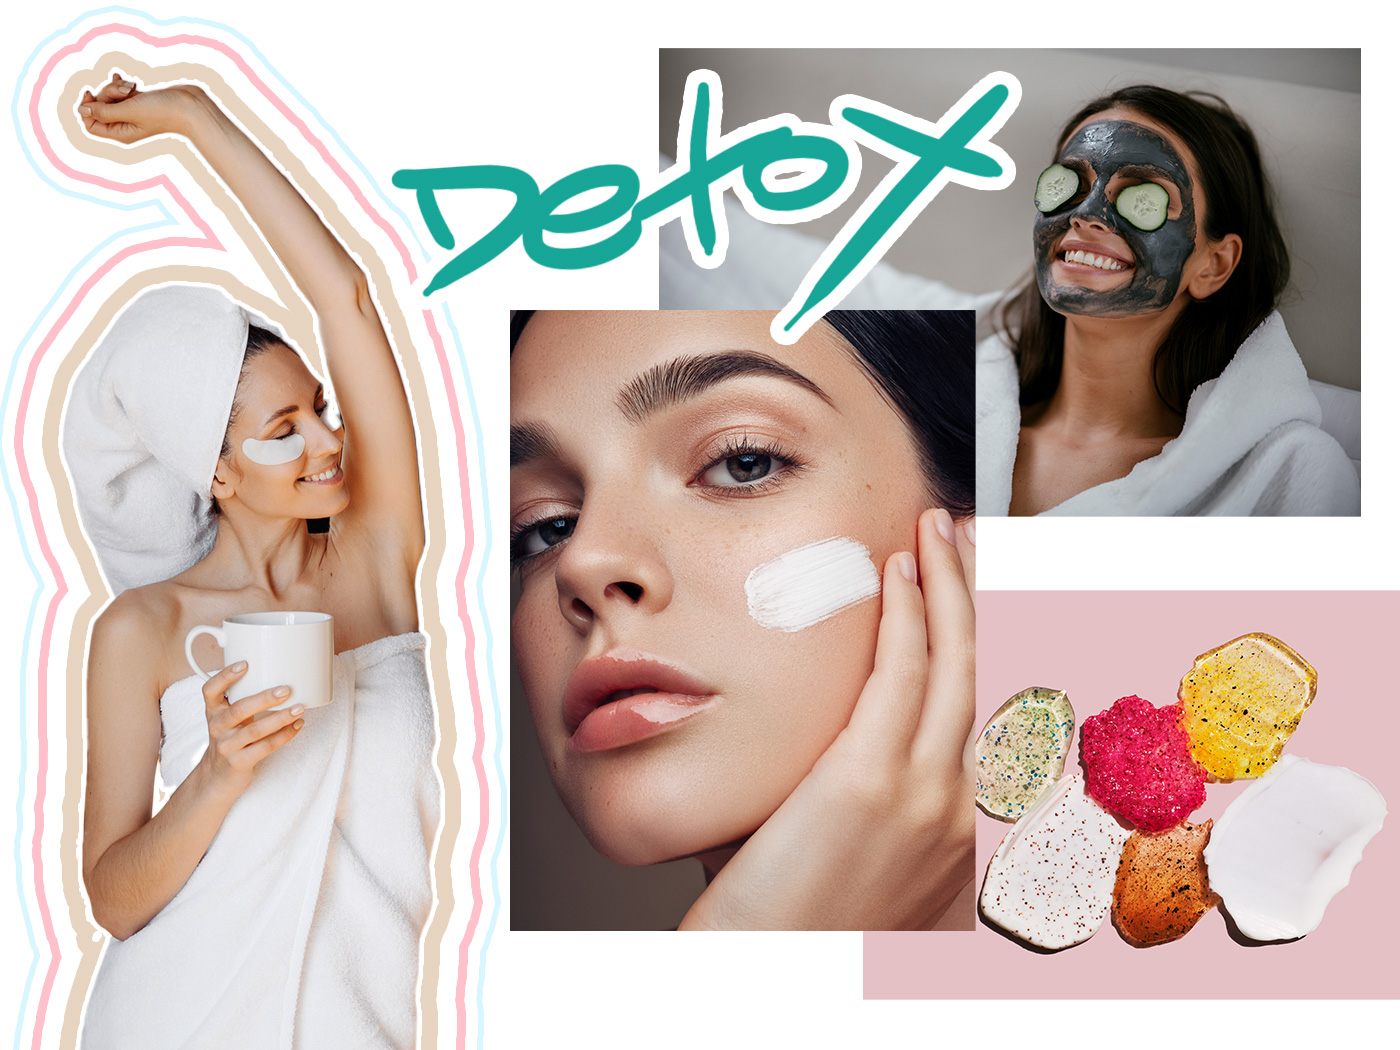 Detox: Ήρθε η στιγμή να αποβάλλεις τις τοξίνες και από το δέρμα σου